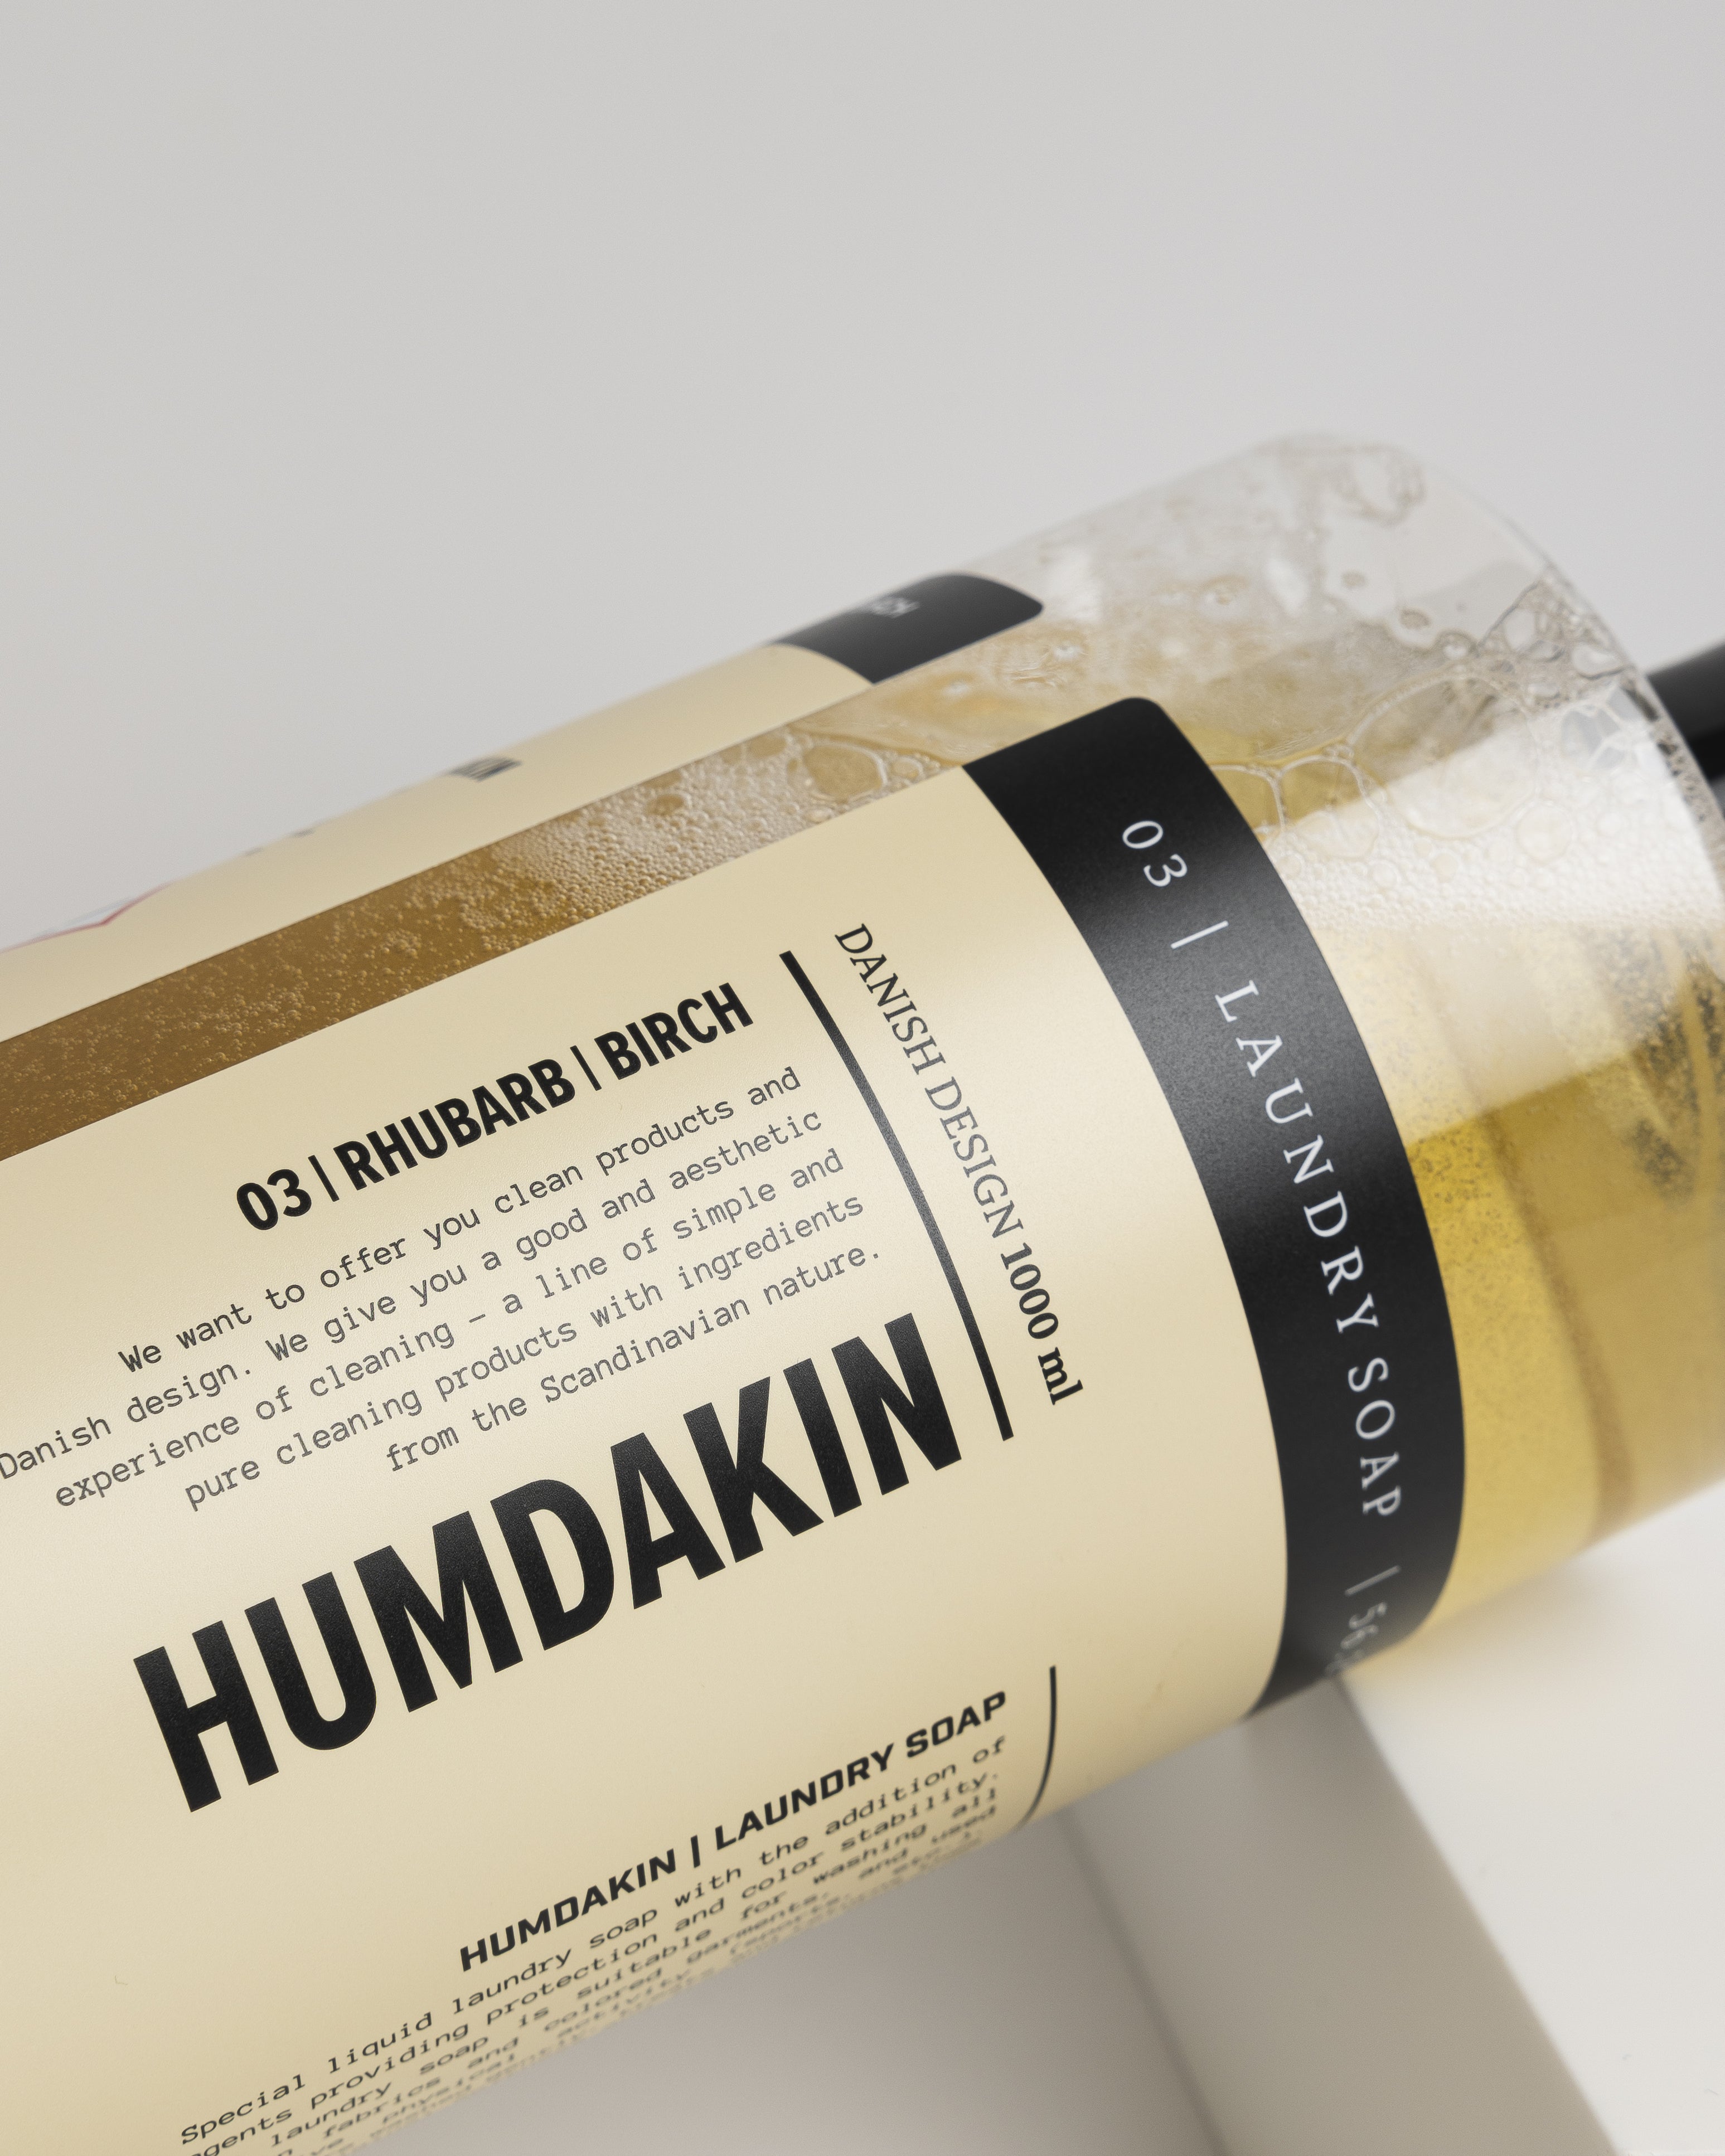 HUMDAKIN 03 Laundry Soap - Rhubarb & Birch Laundry 00 Neutral/No color